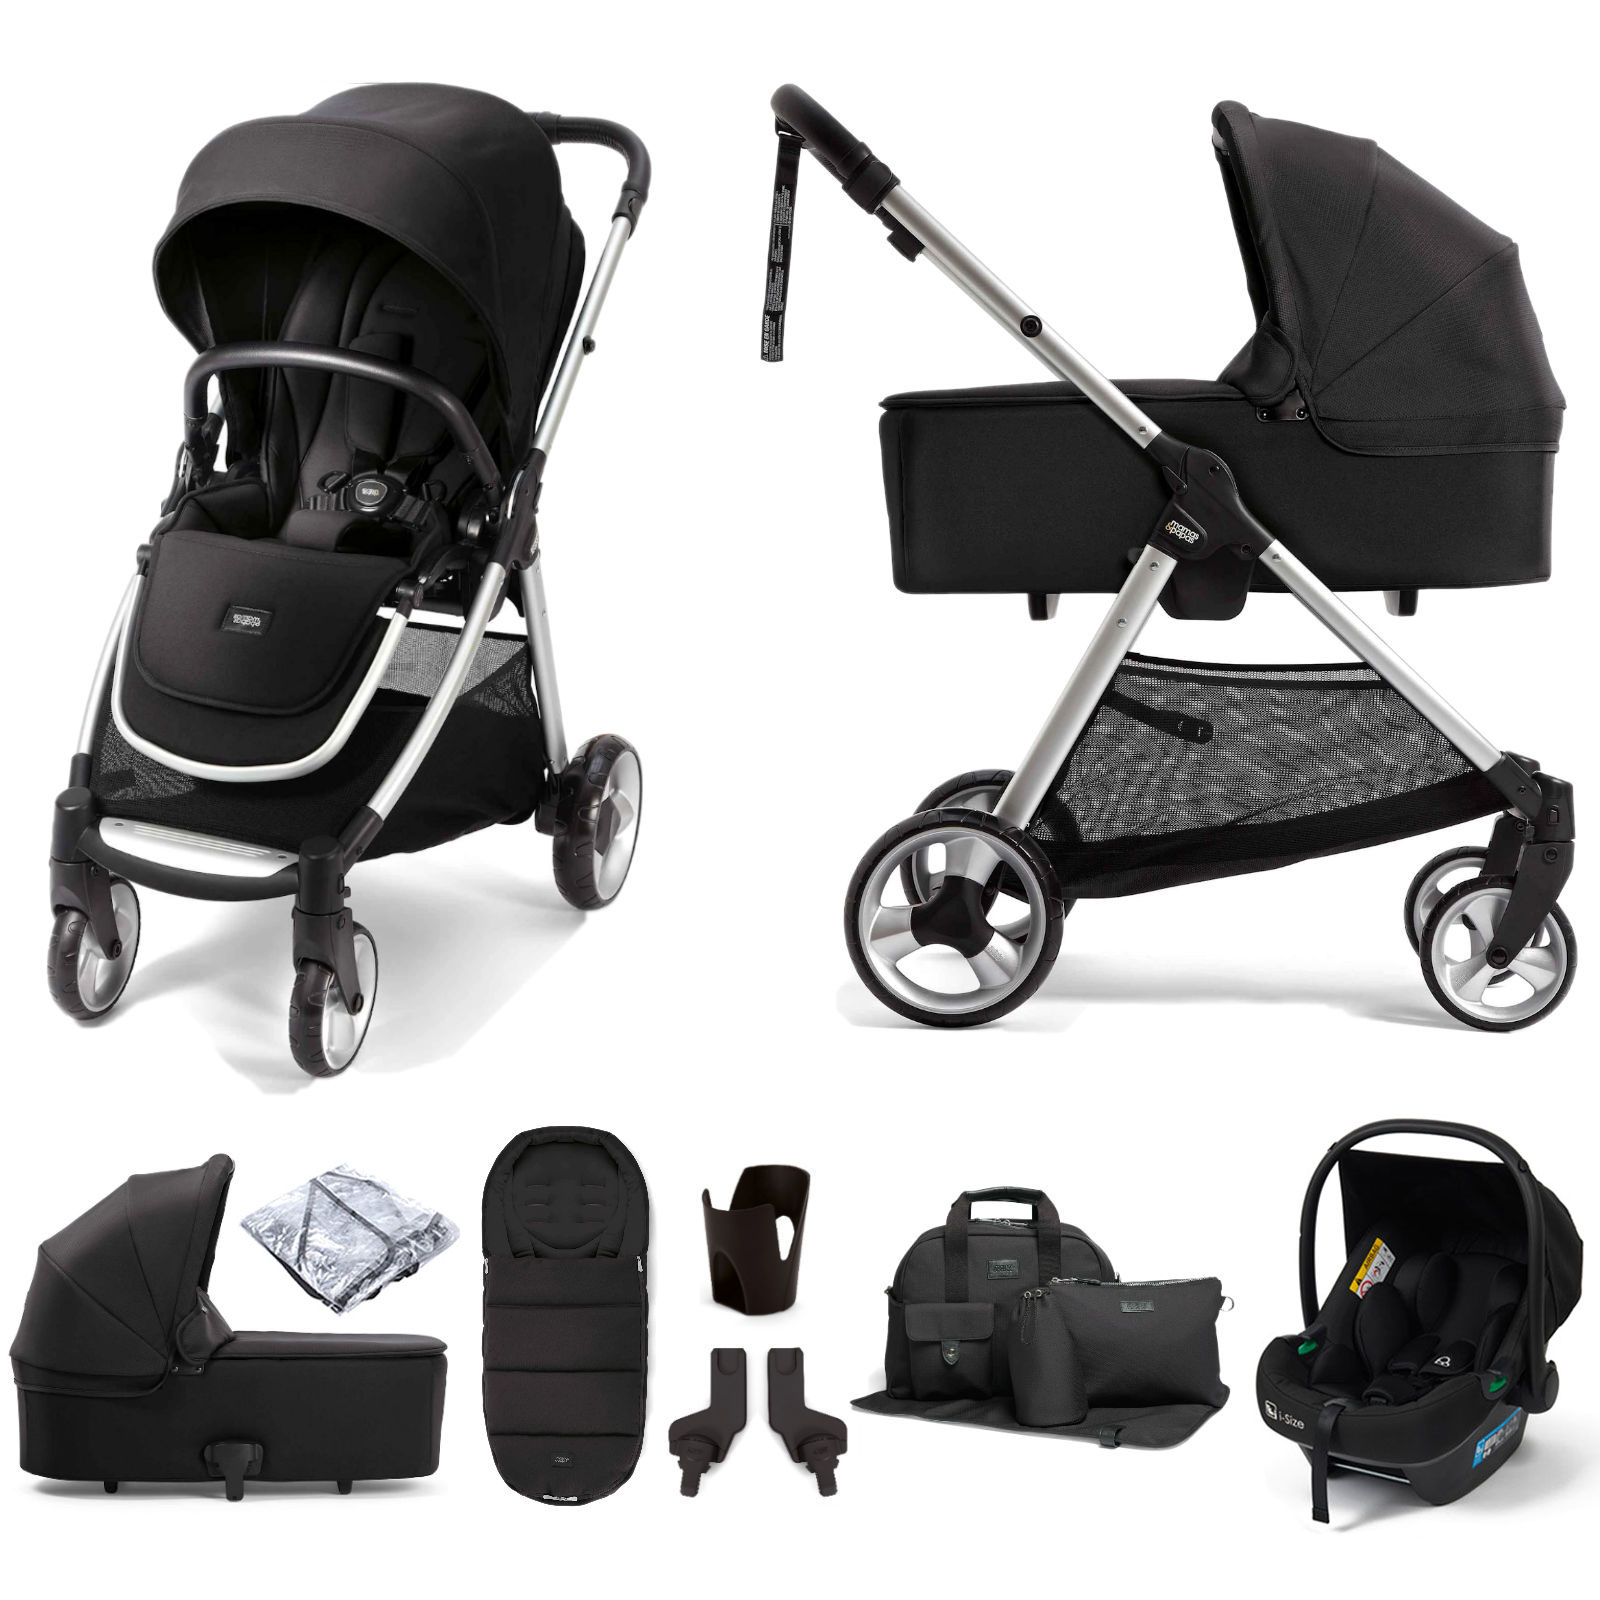 Mamas & Papas Flip XT2 Essentials (Safe Fit i-Size Infant Car Seat) Travel System with Carrycot - Black